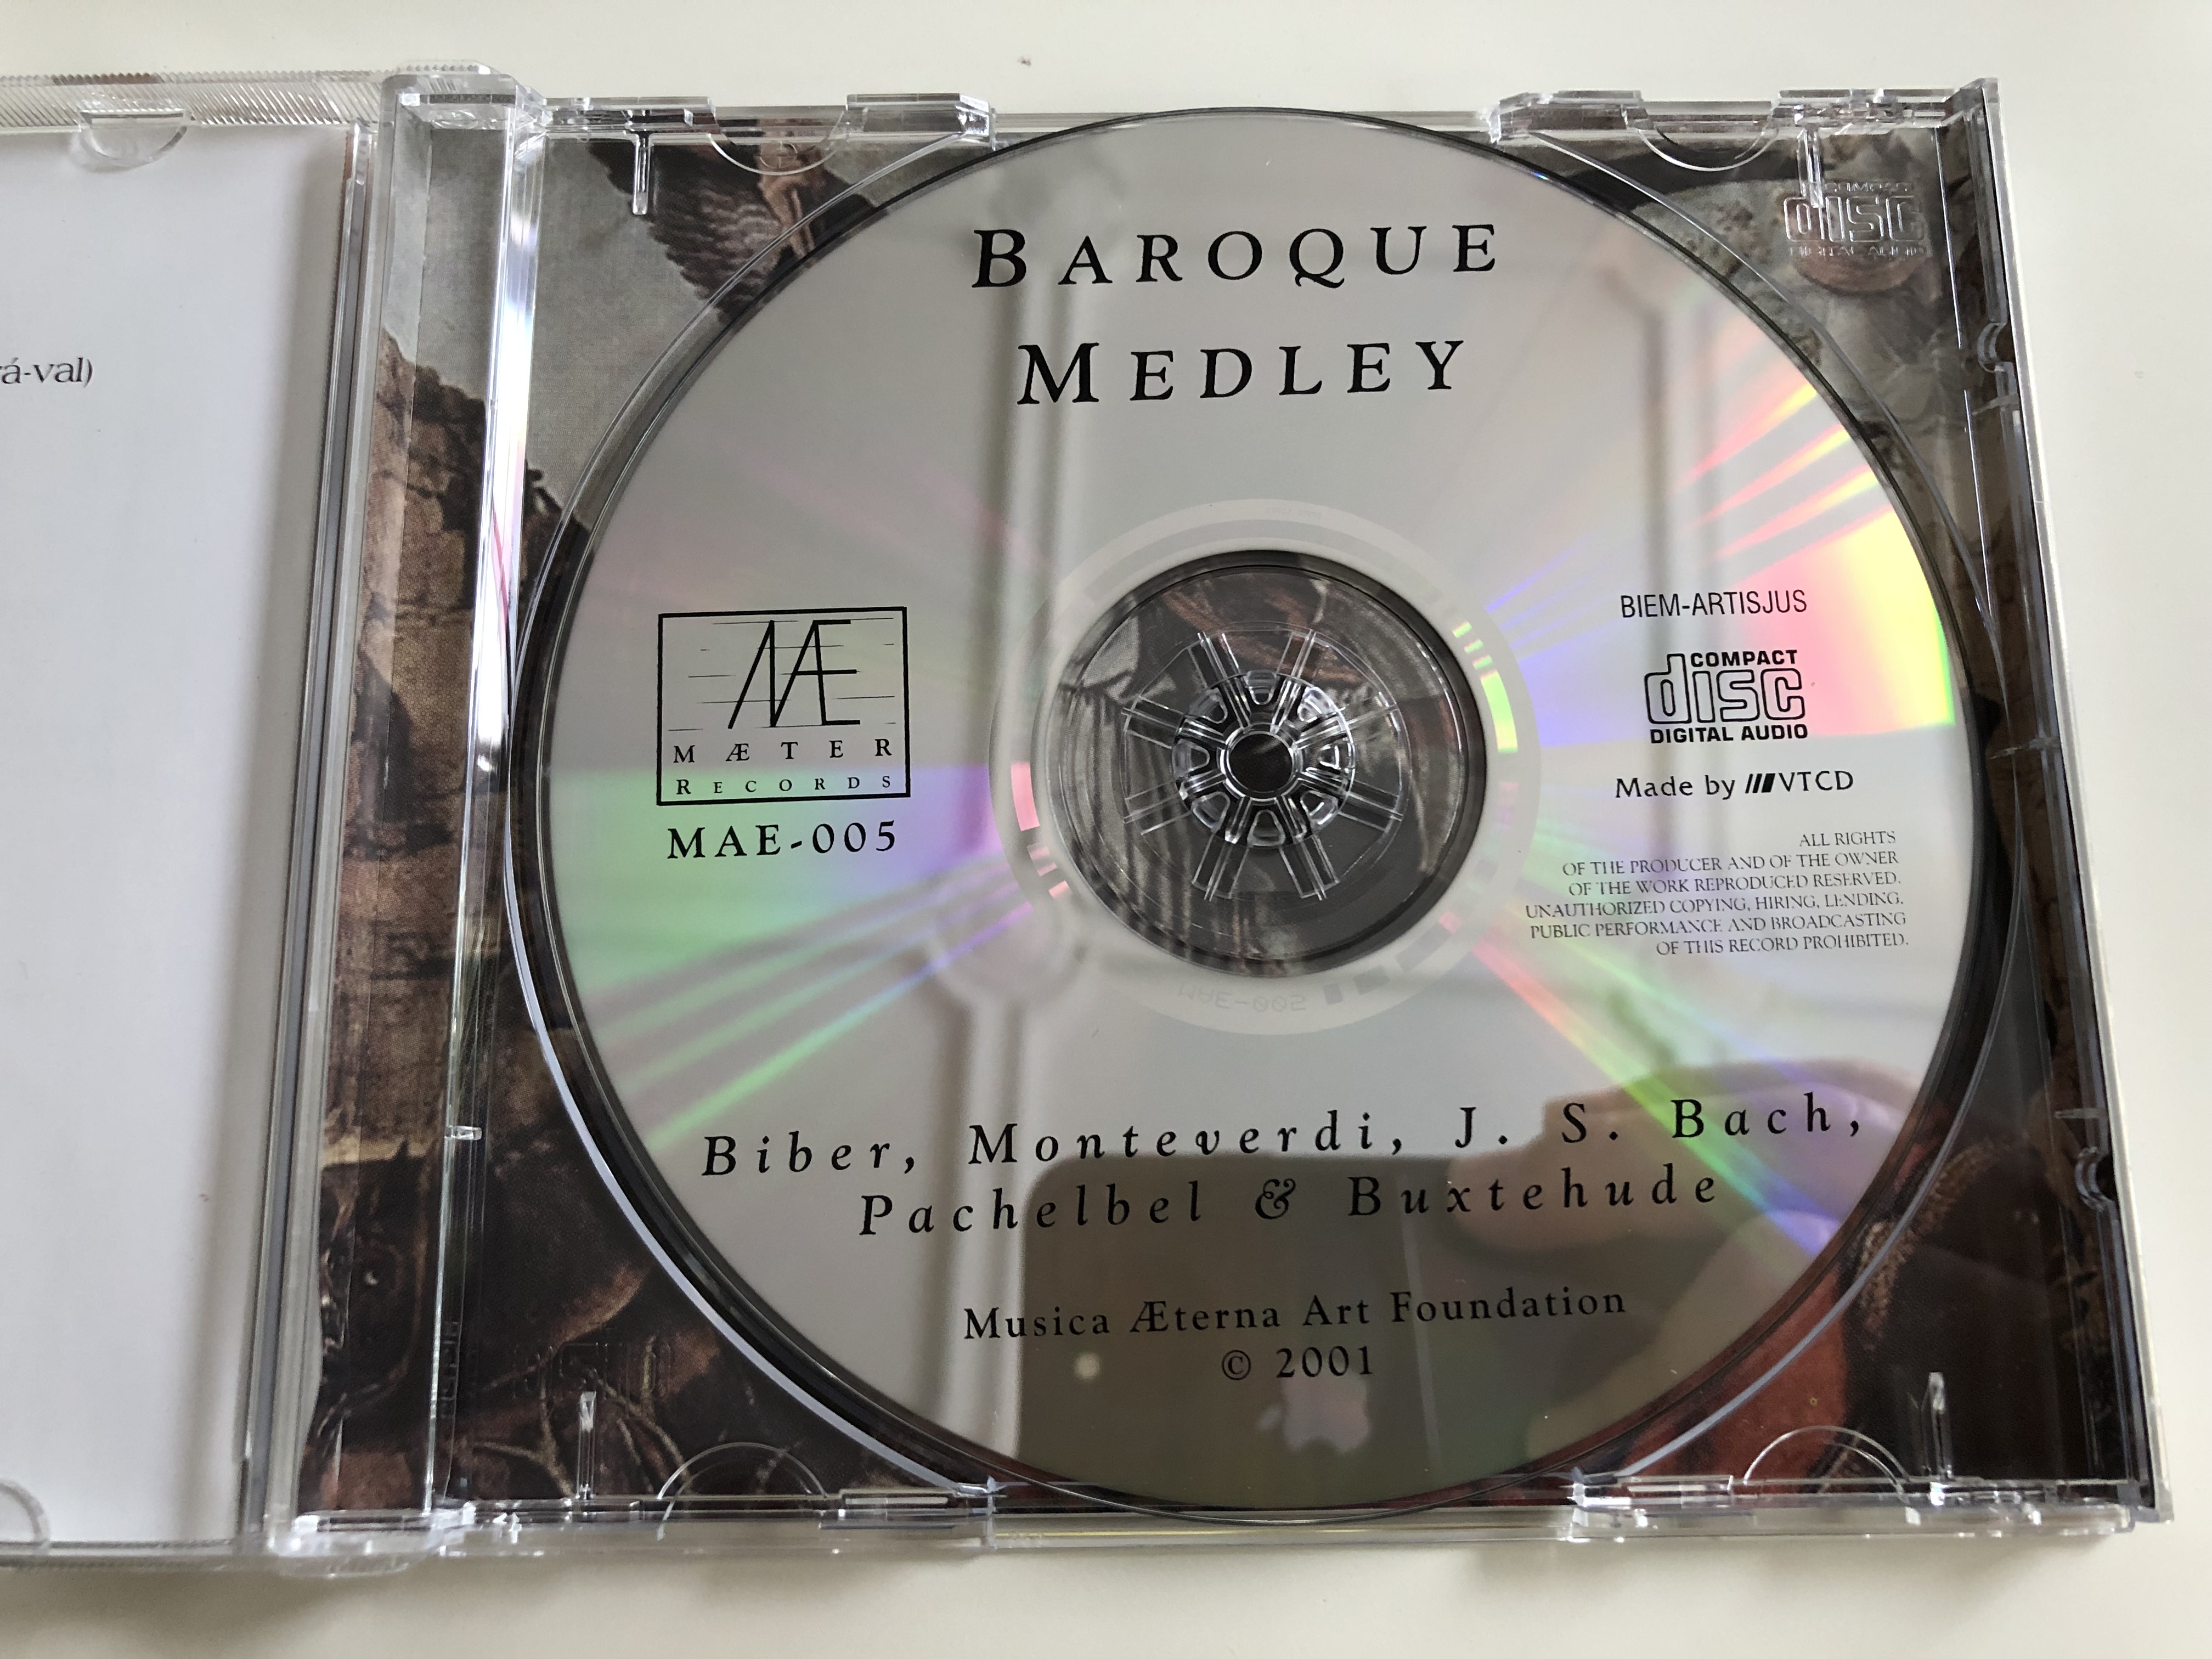 barokk-zenei-valogatas-baroque-medley-maeter-records-audio-cd-2001-mae-005-5-.jpg